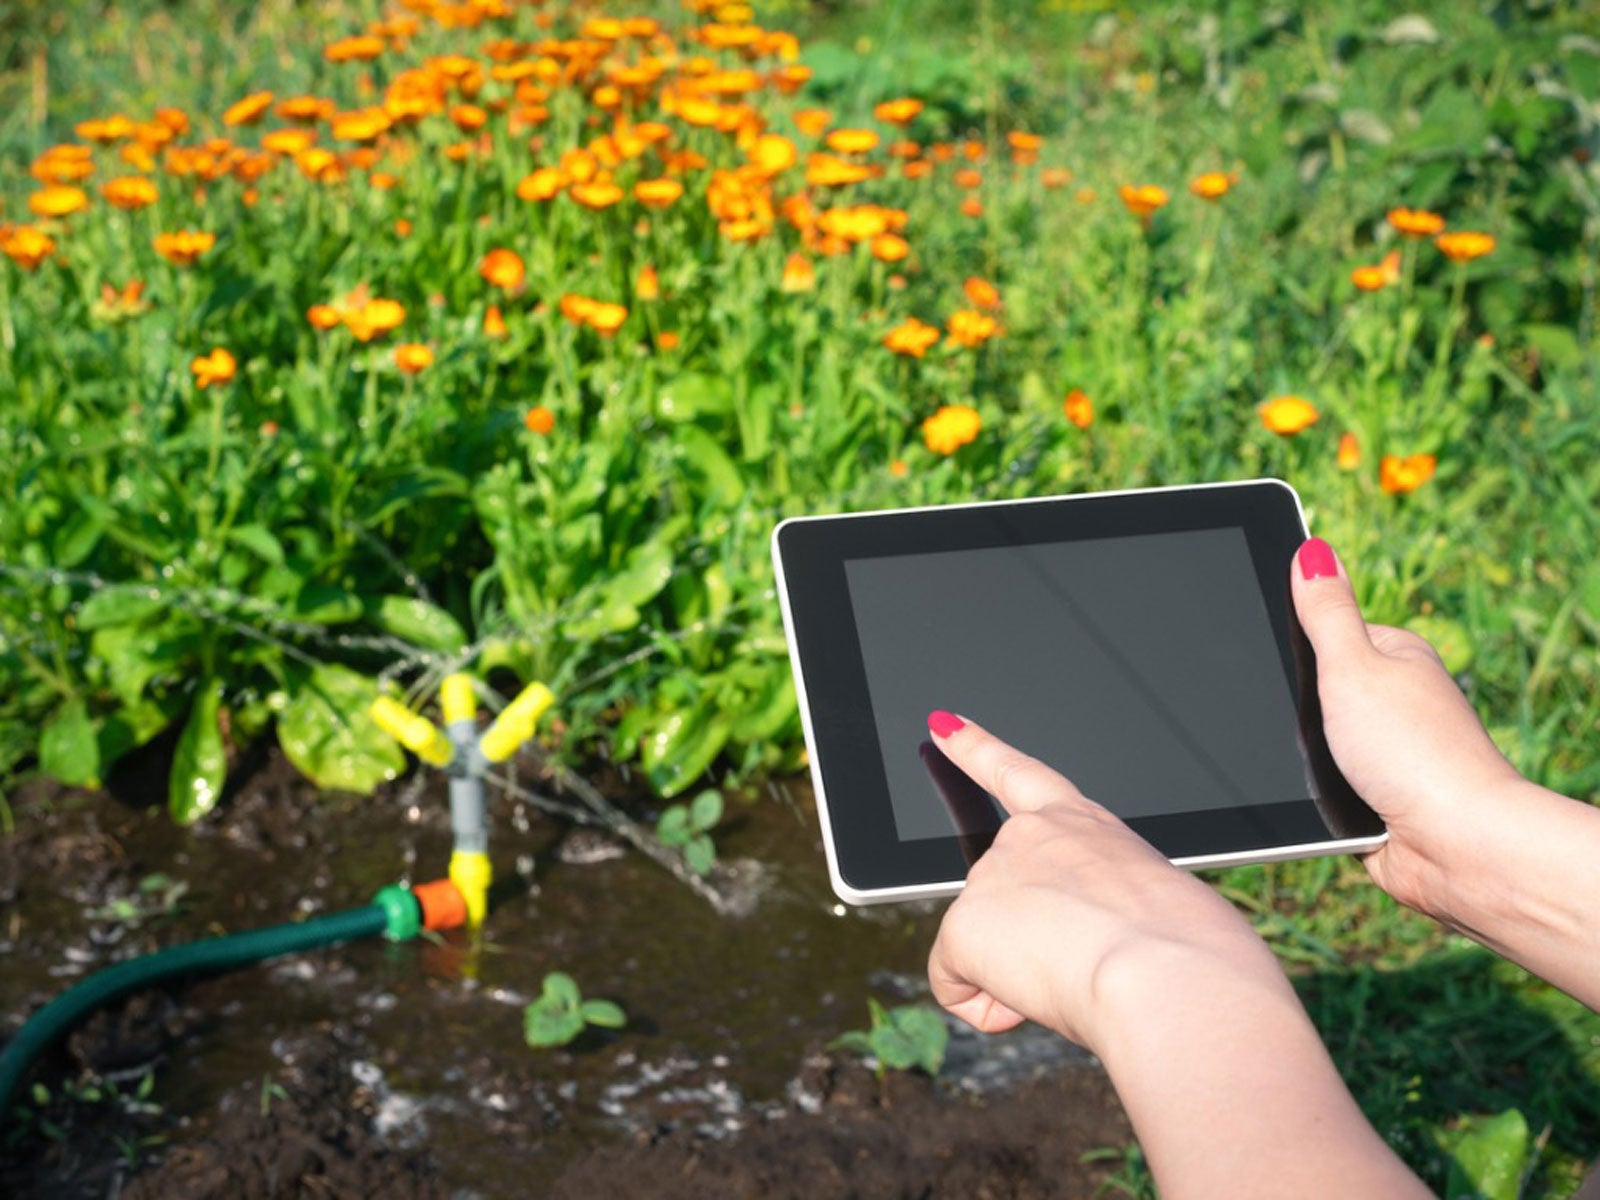 Labor saving device: Smart Garden Irrigation System